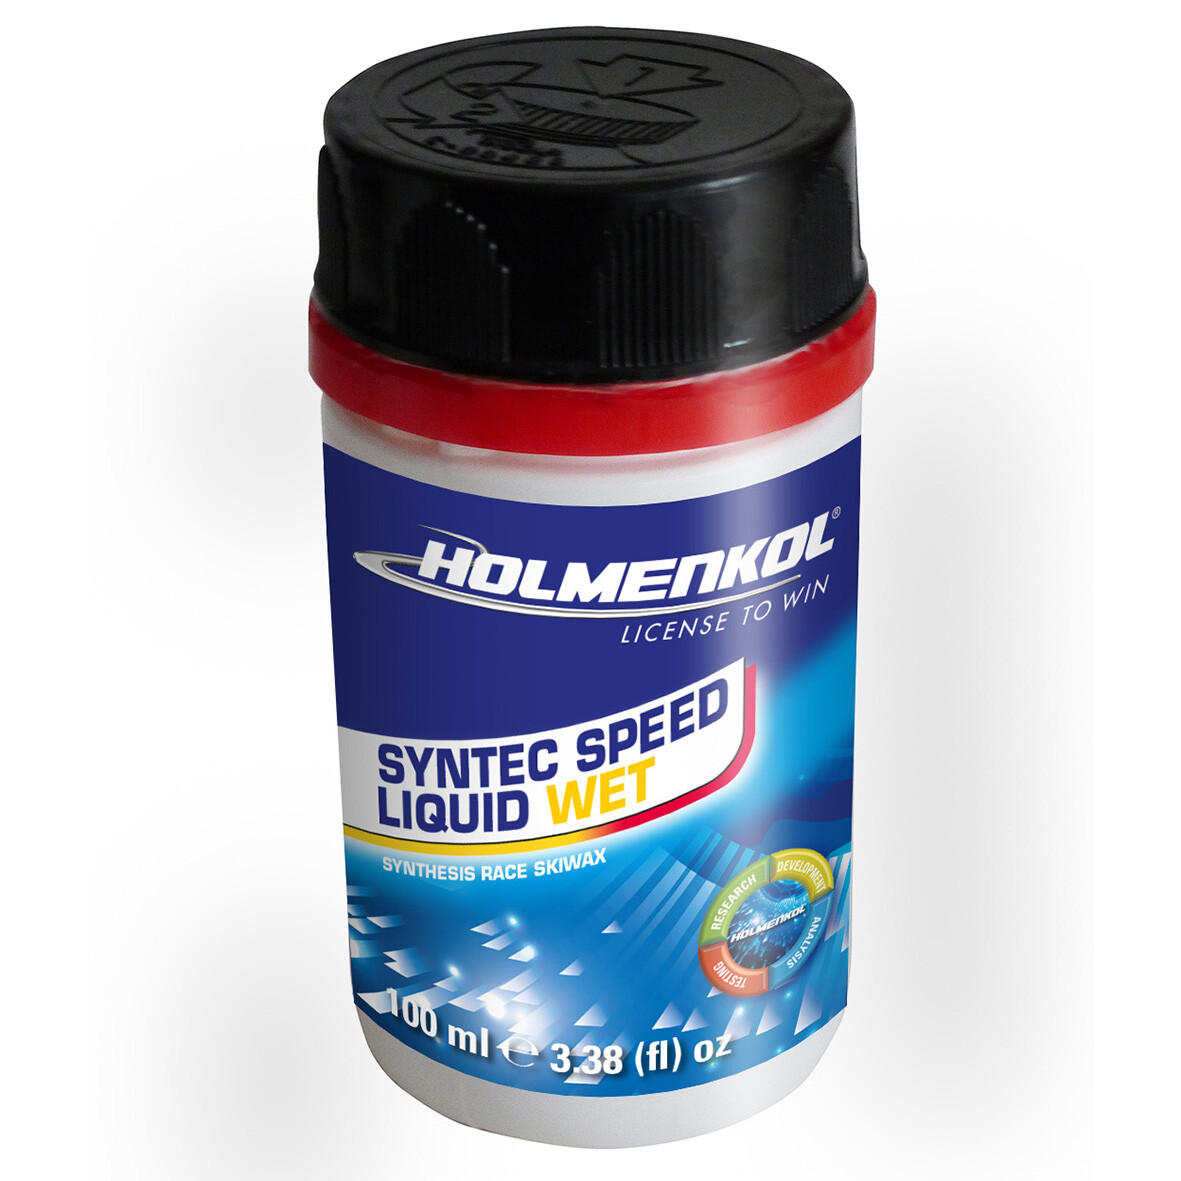 Holmenkol Syntec Speed liquid wet 100 ml